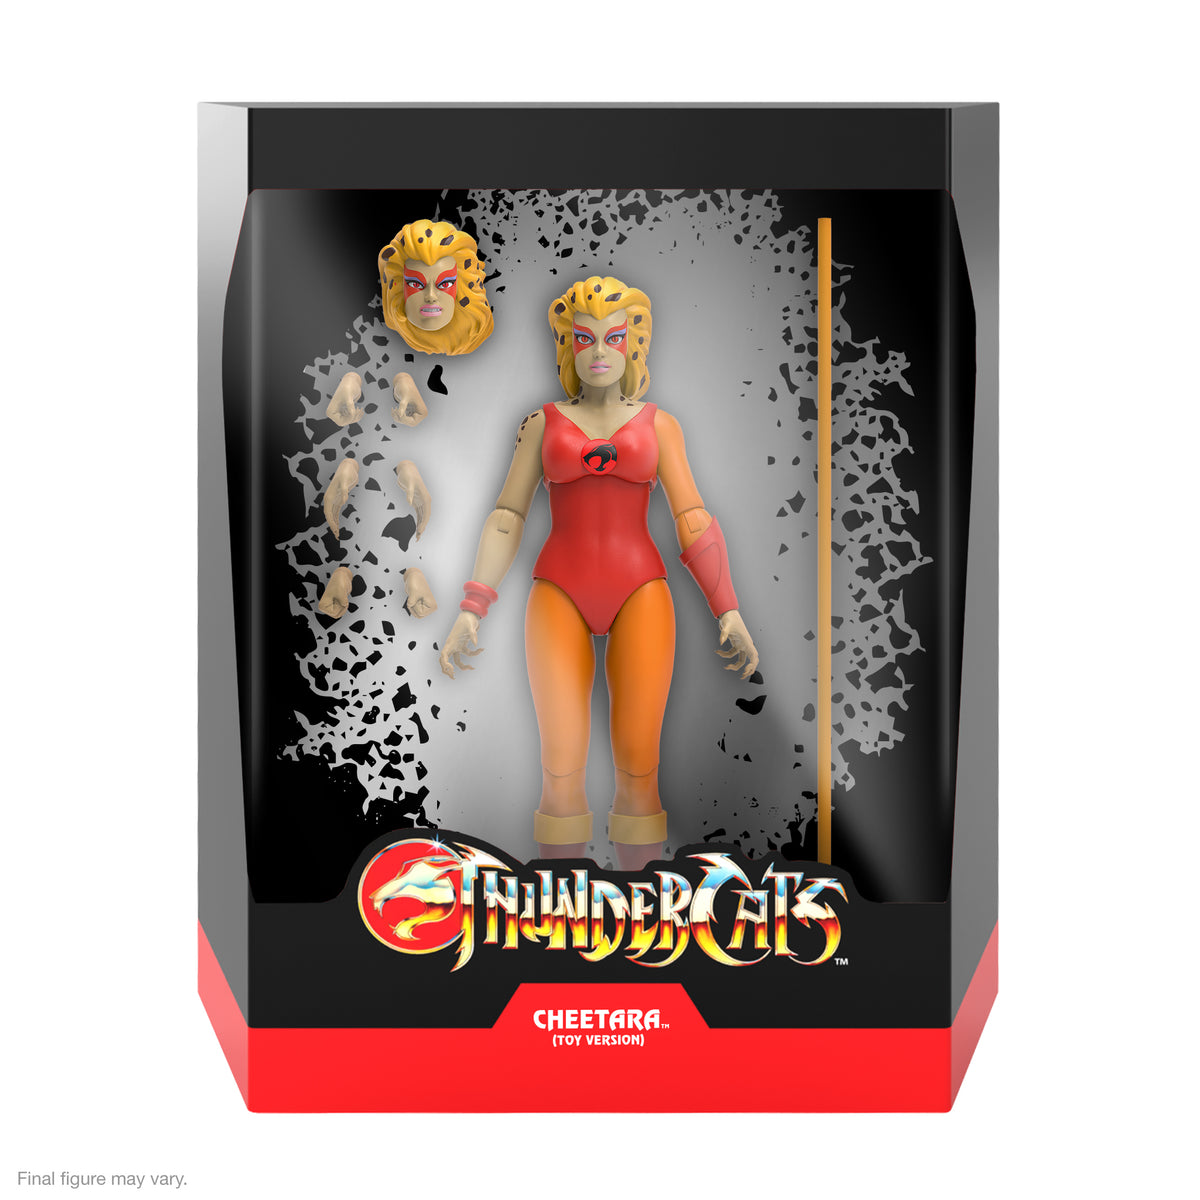 She's Fantastic: ThunderCats Ultimates - CHEETARA!